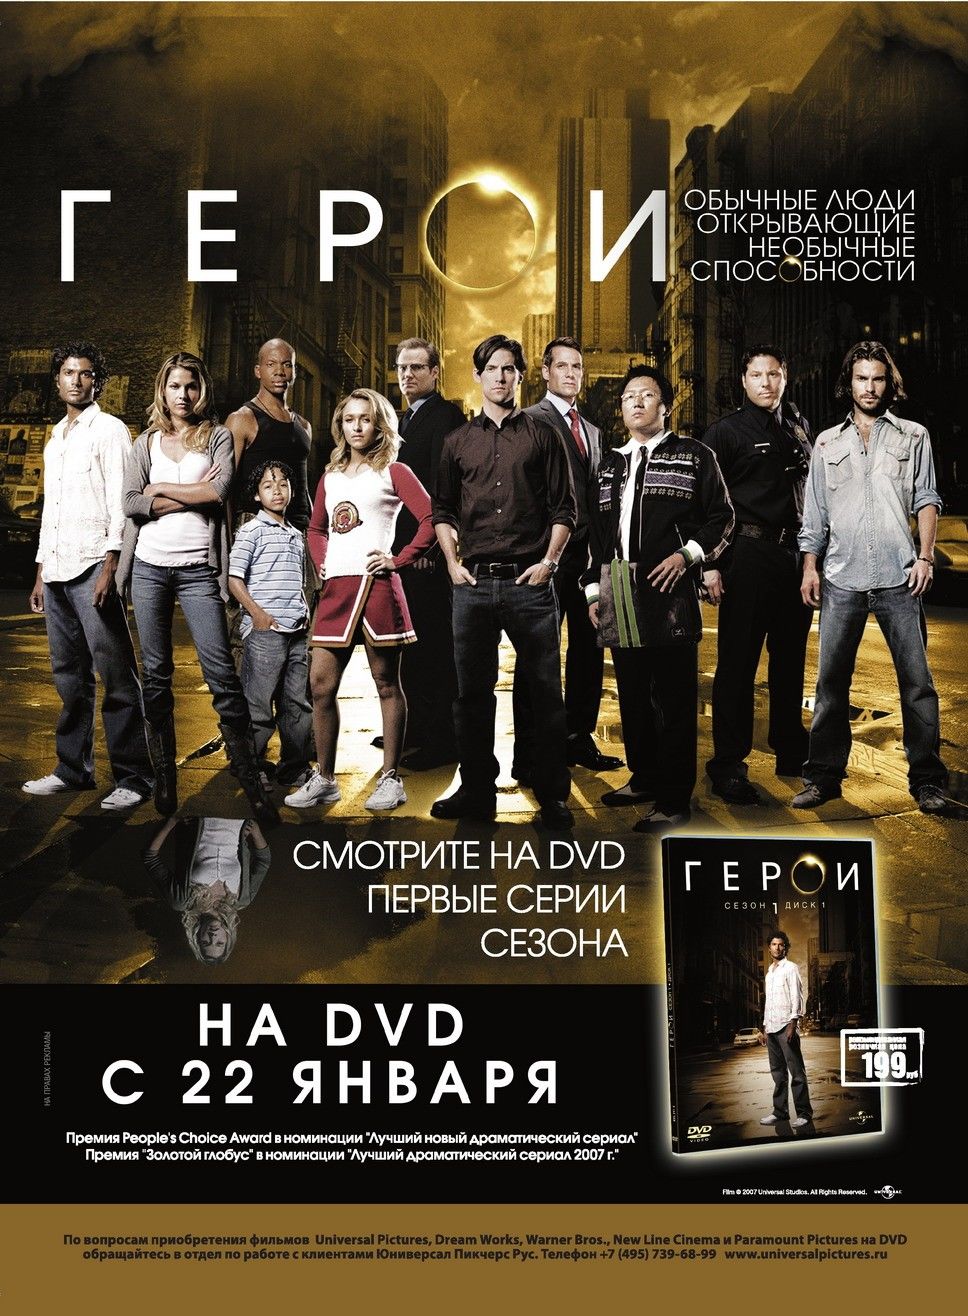 Герои (сериал 2006 – 2010)